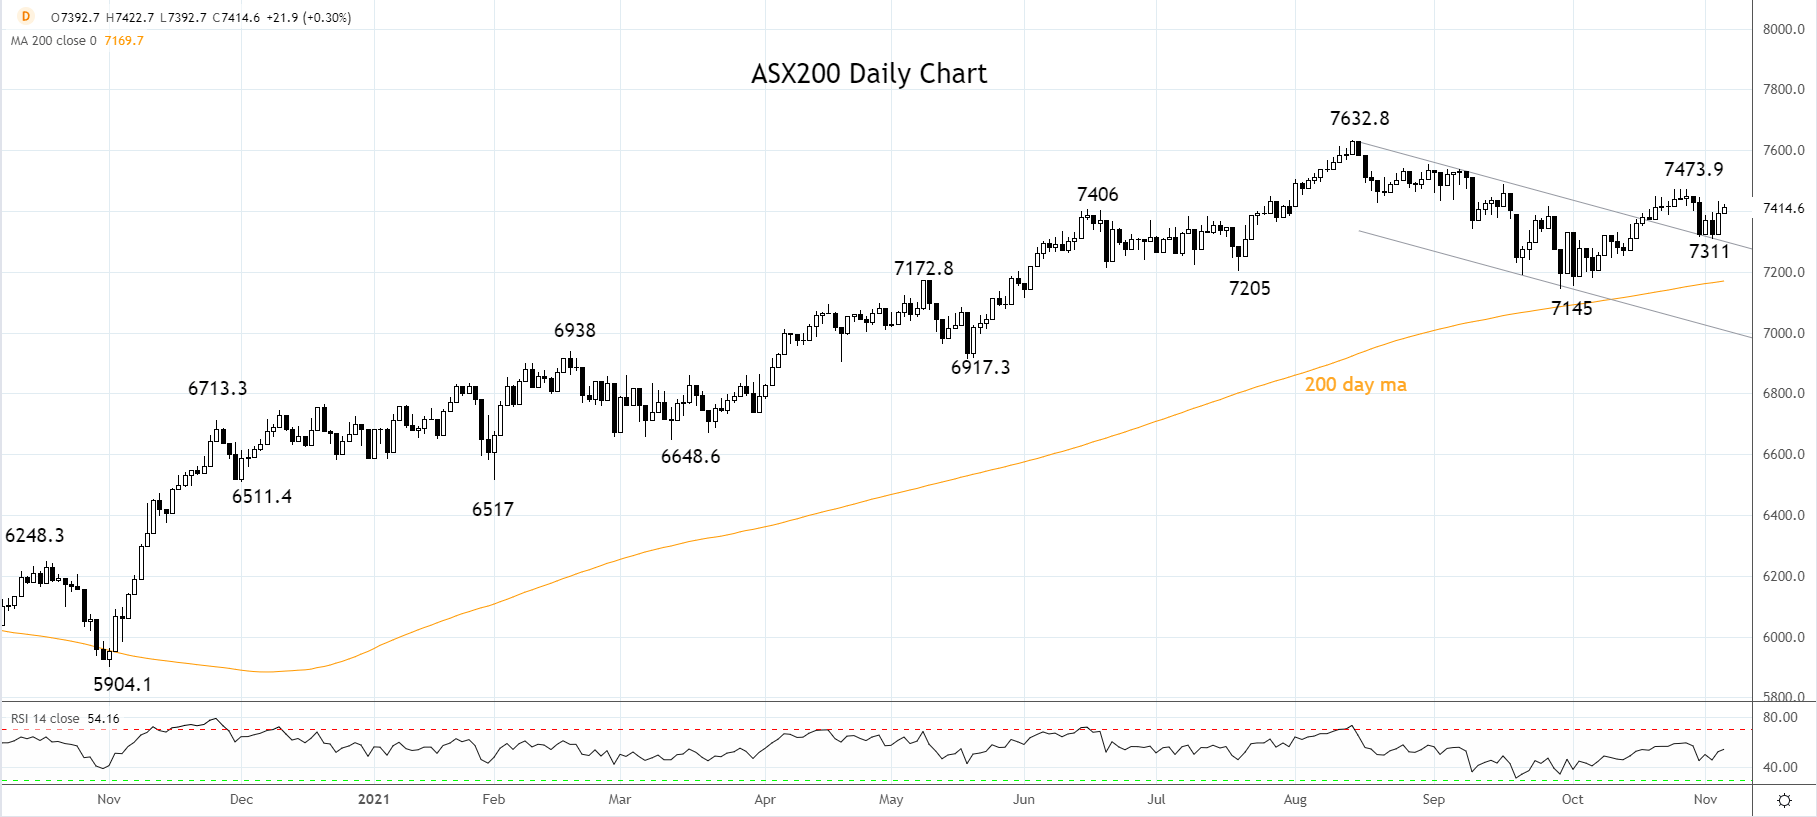 ASX200 daily chart Nov 4th